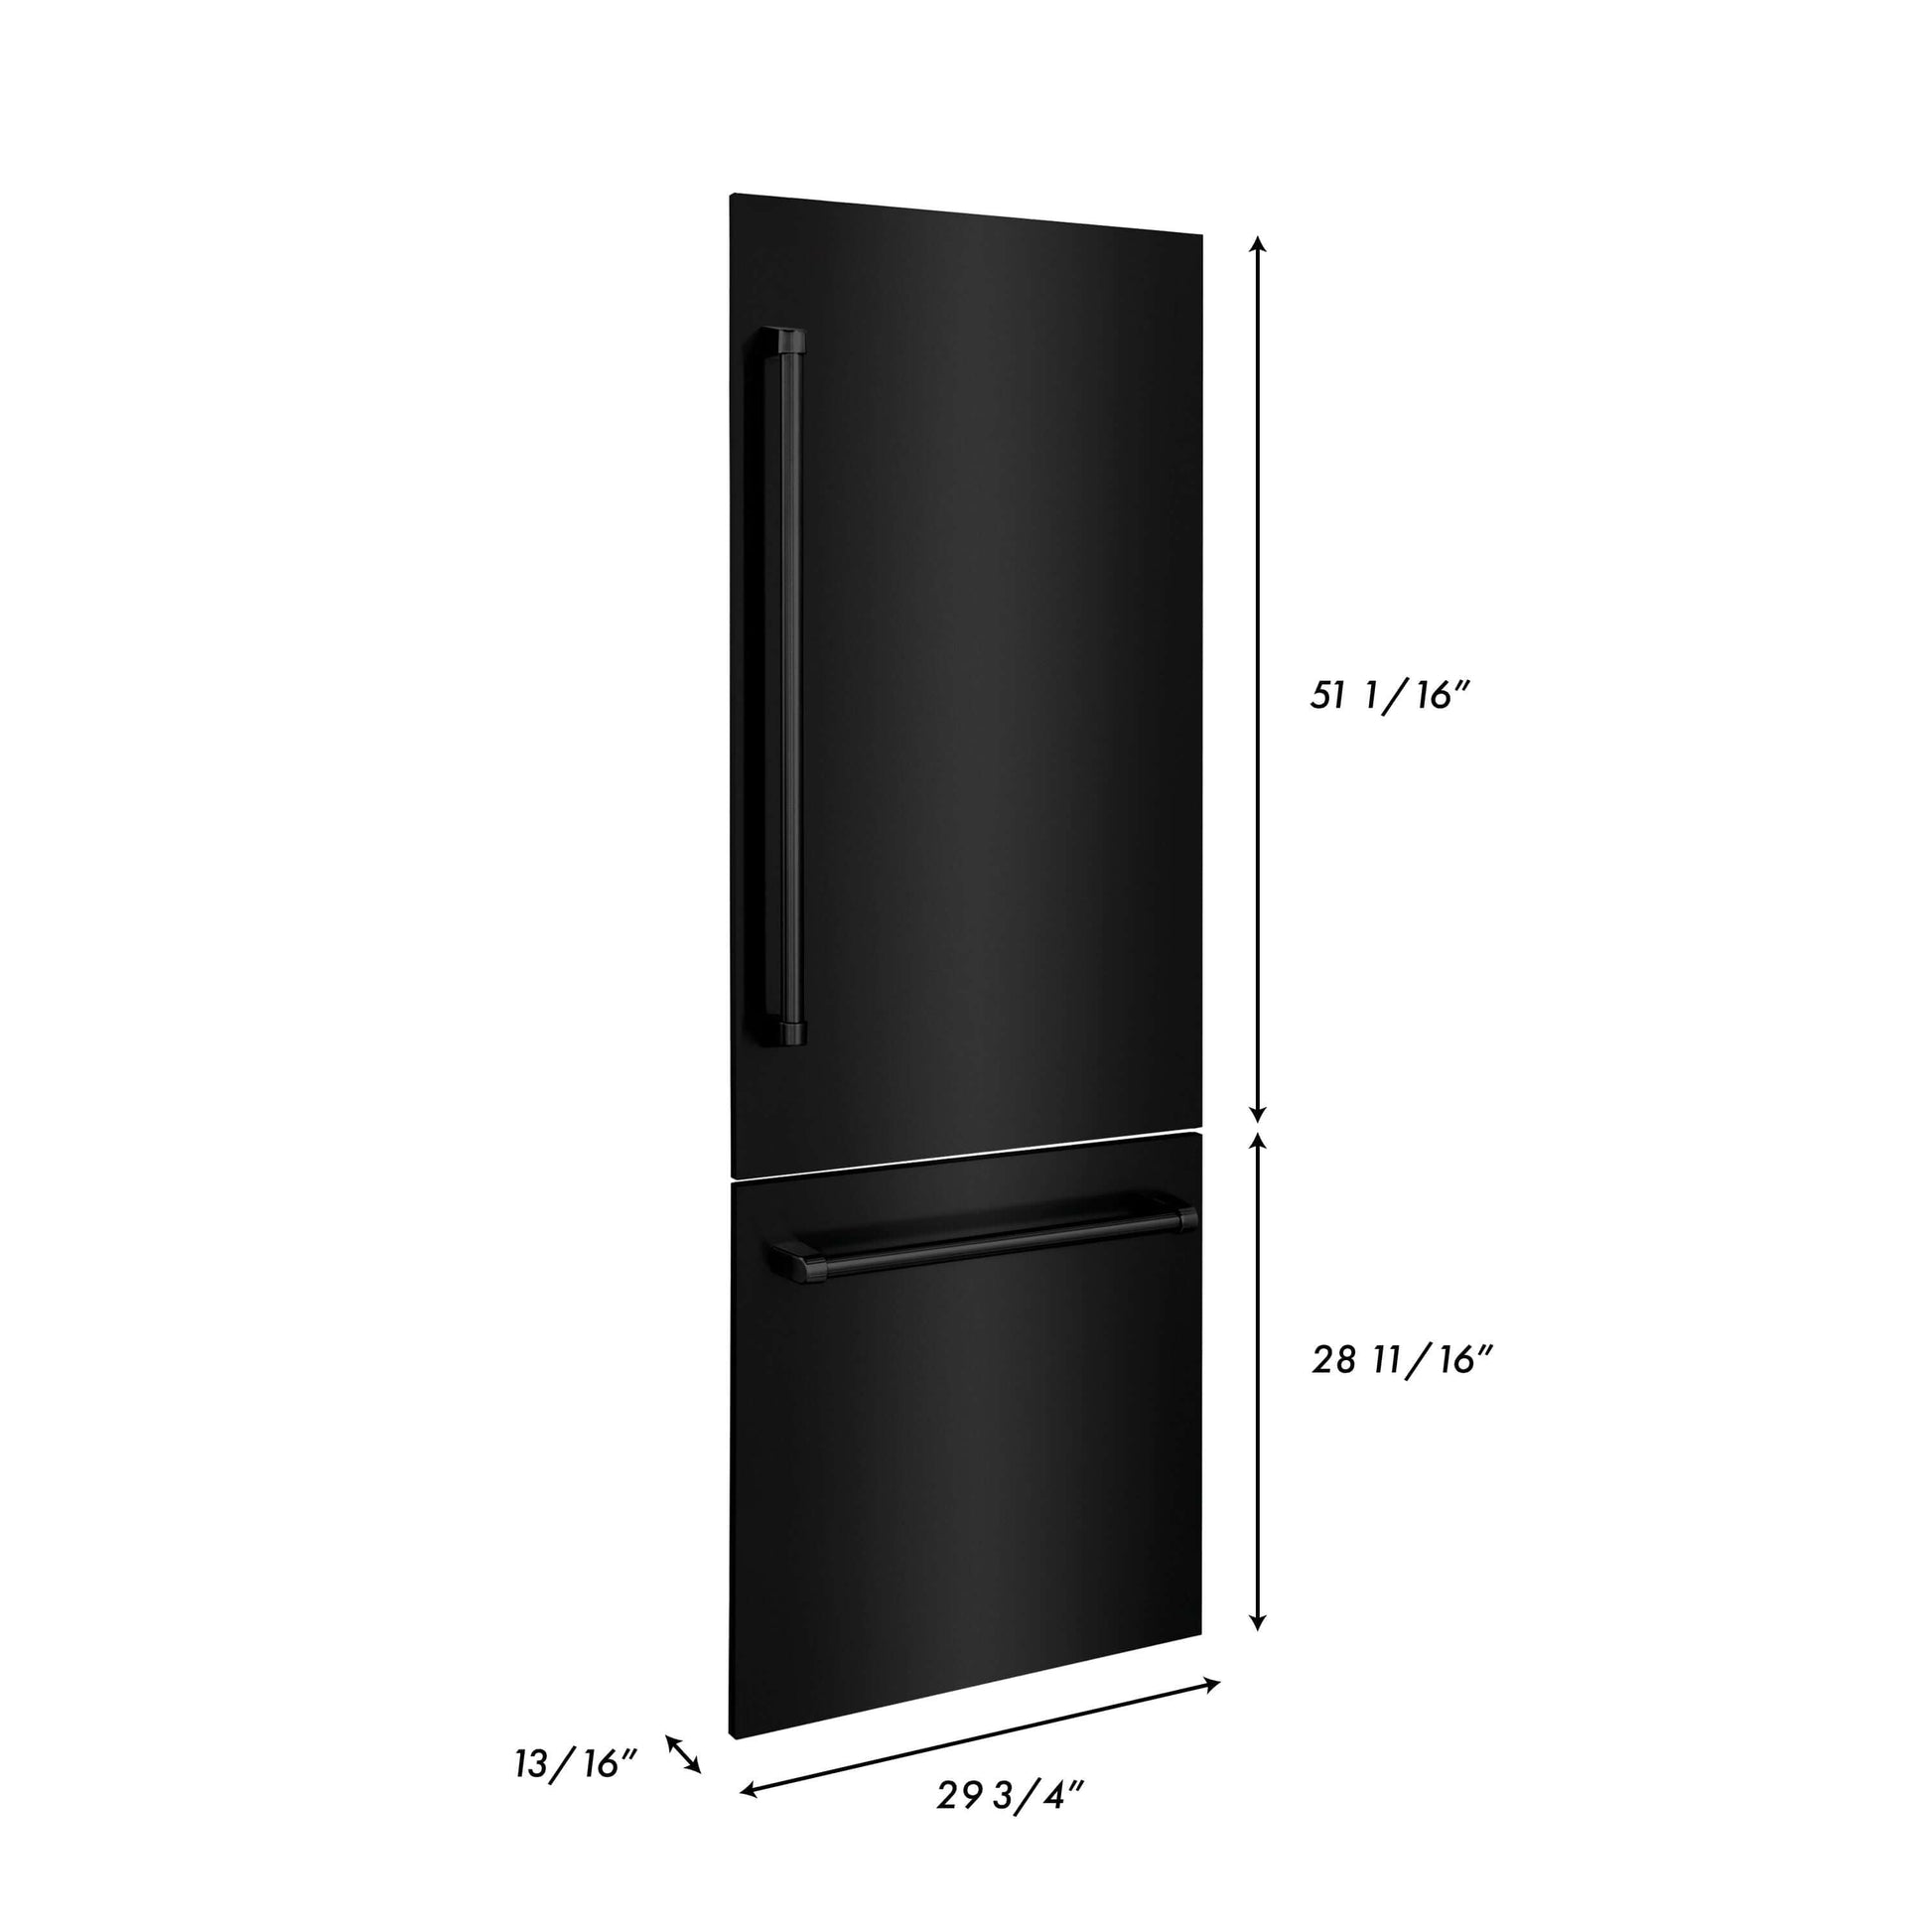 Panels & Handles Only - ZLINE 30" Refrigerator Panels in Black Stainless Steel